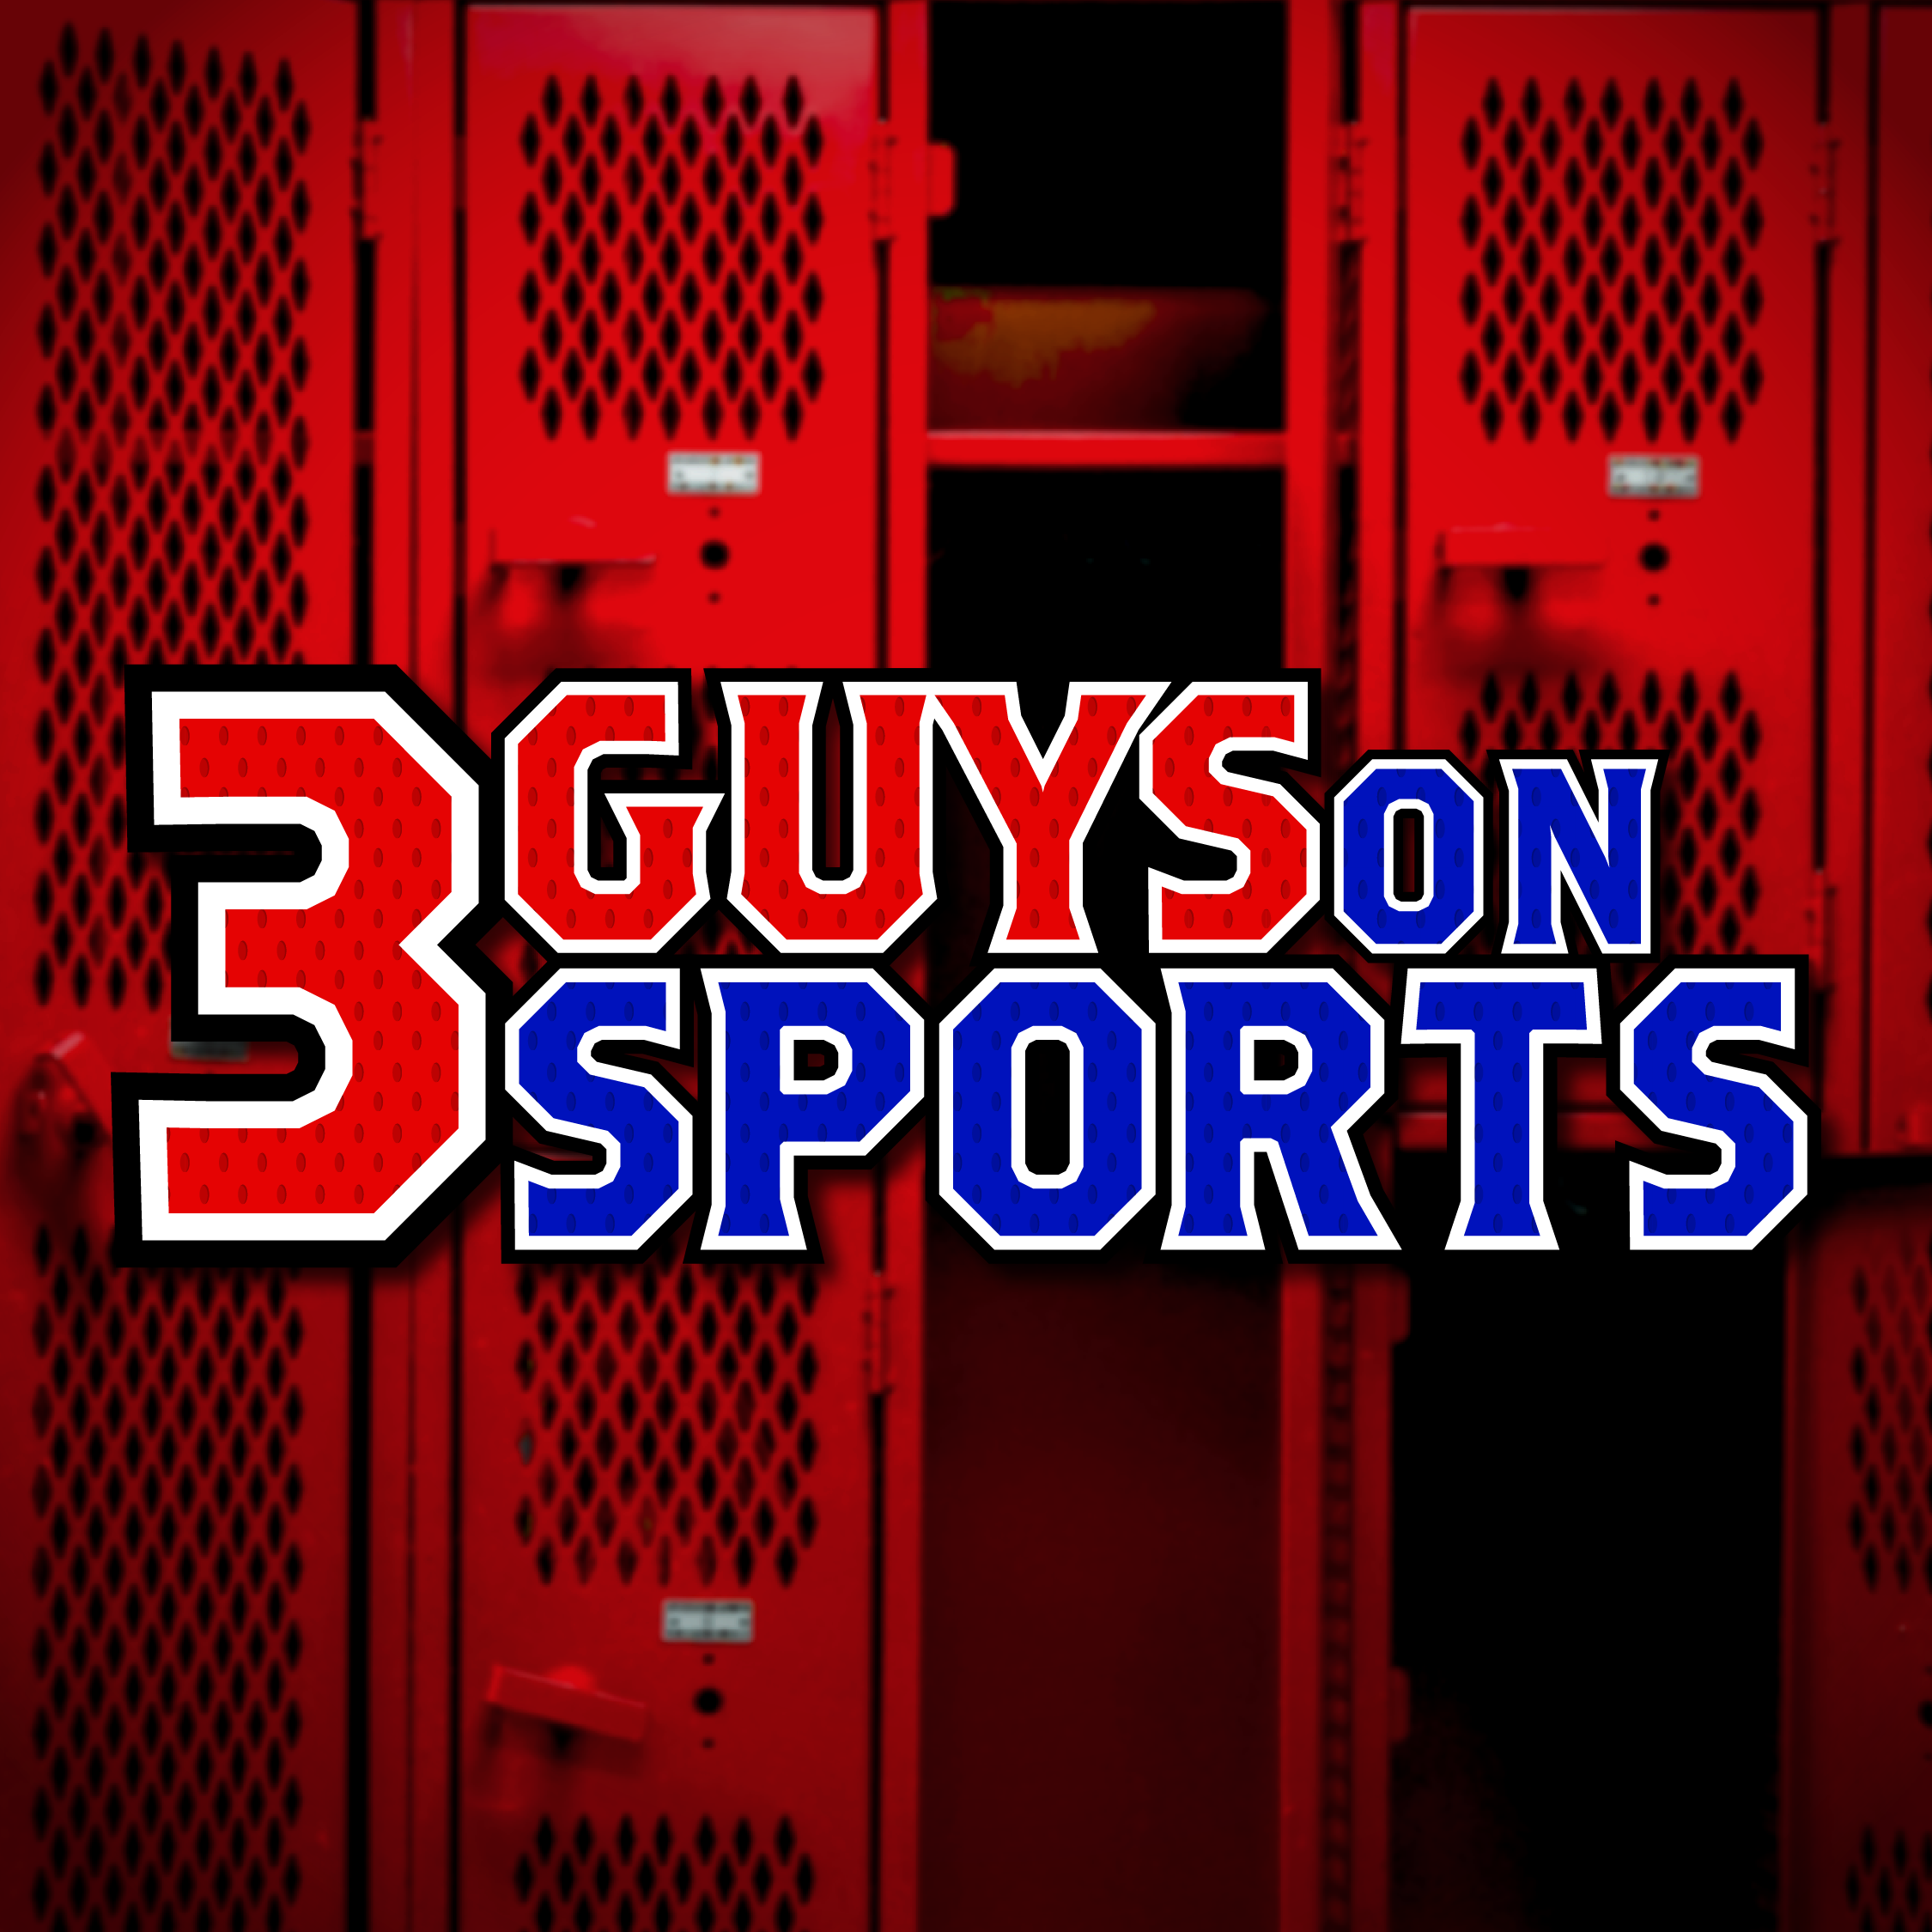 Three Guys on Sports